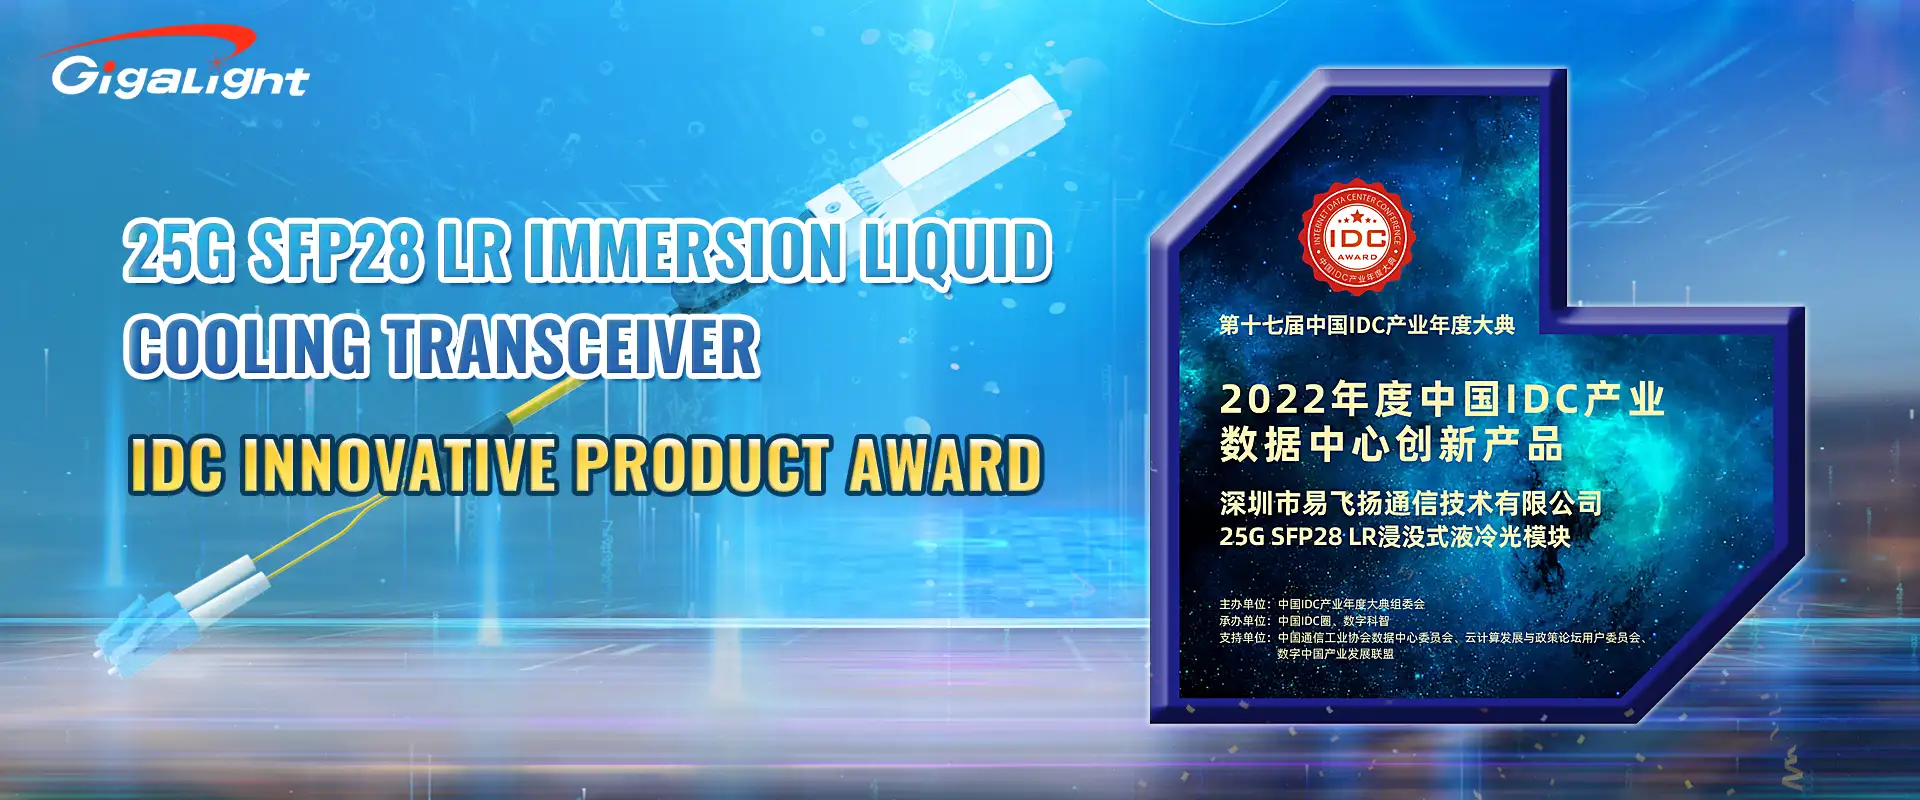 GIGALIGHT won the 2022 China IDC Industrial Data Center Innovative Product award